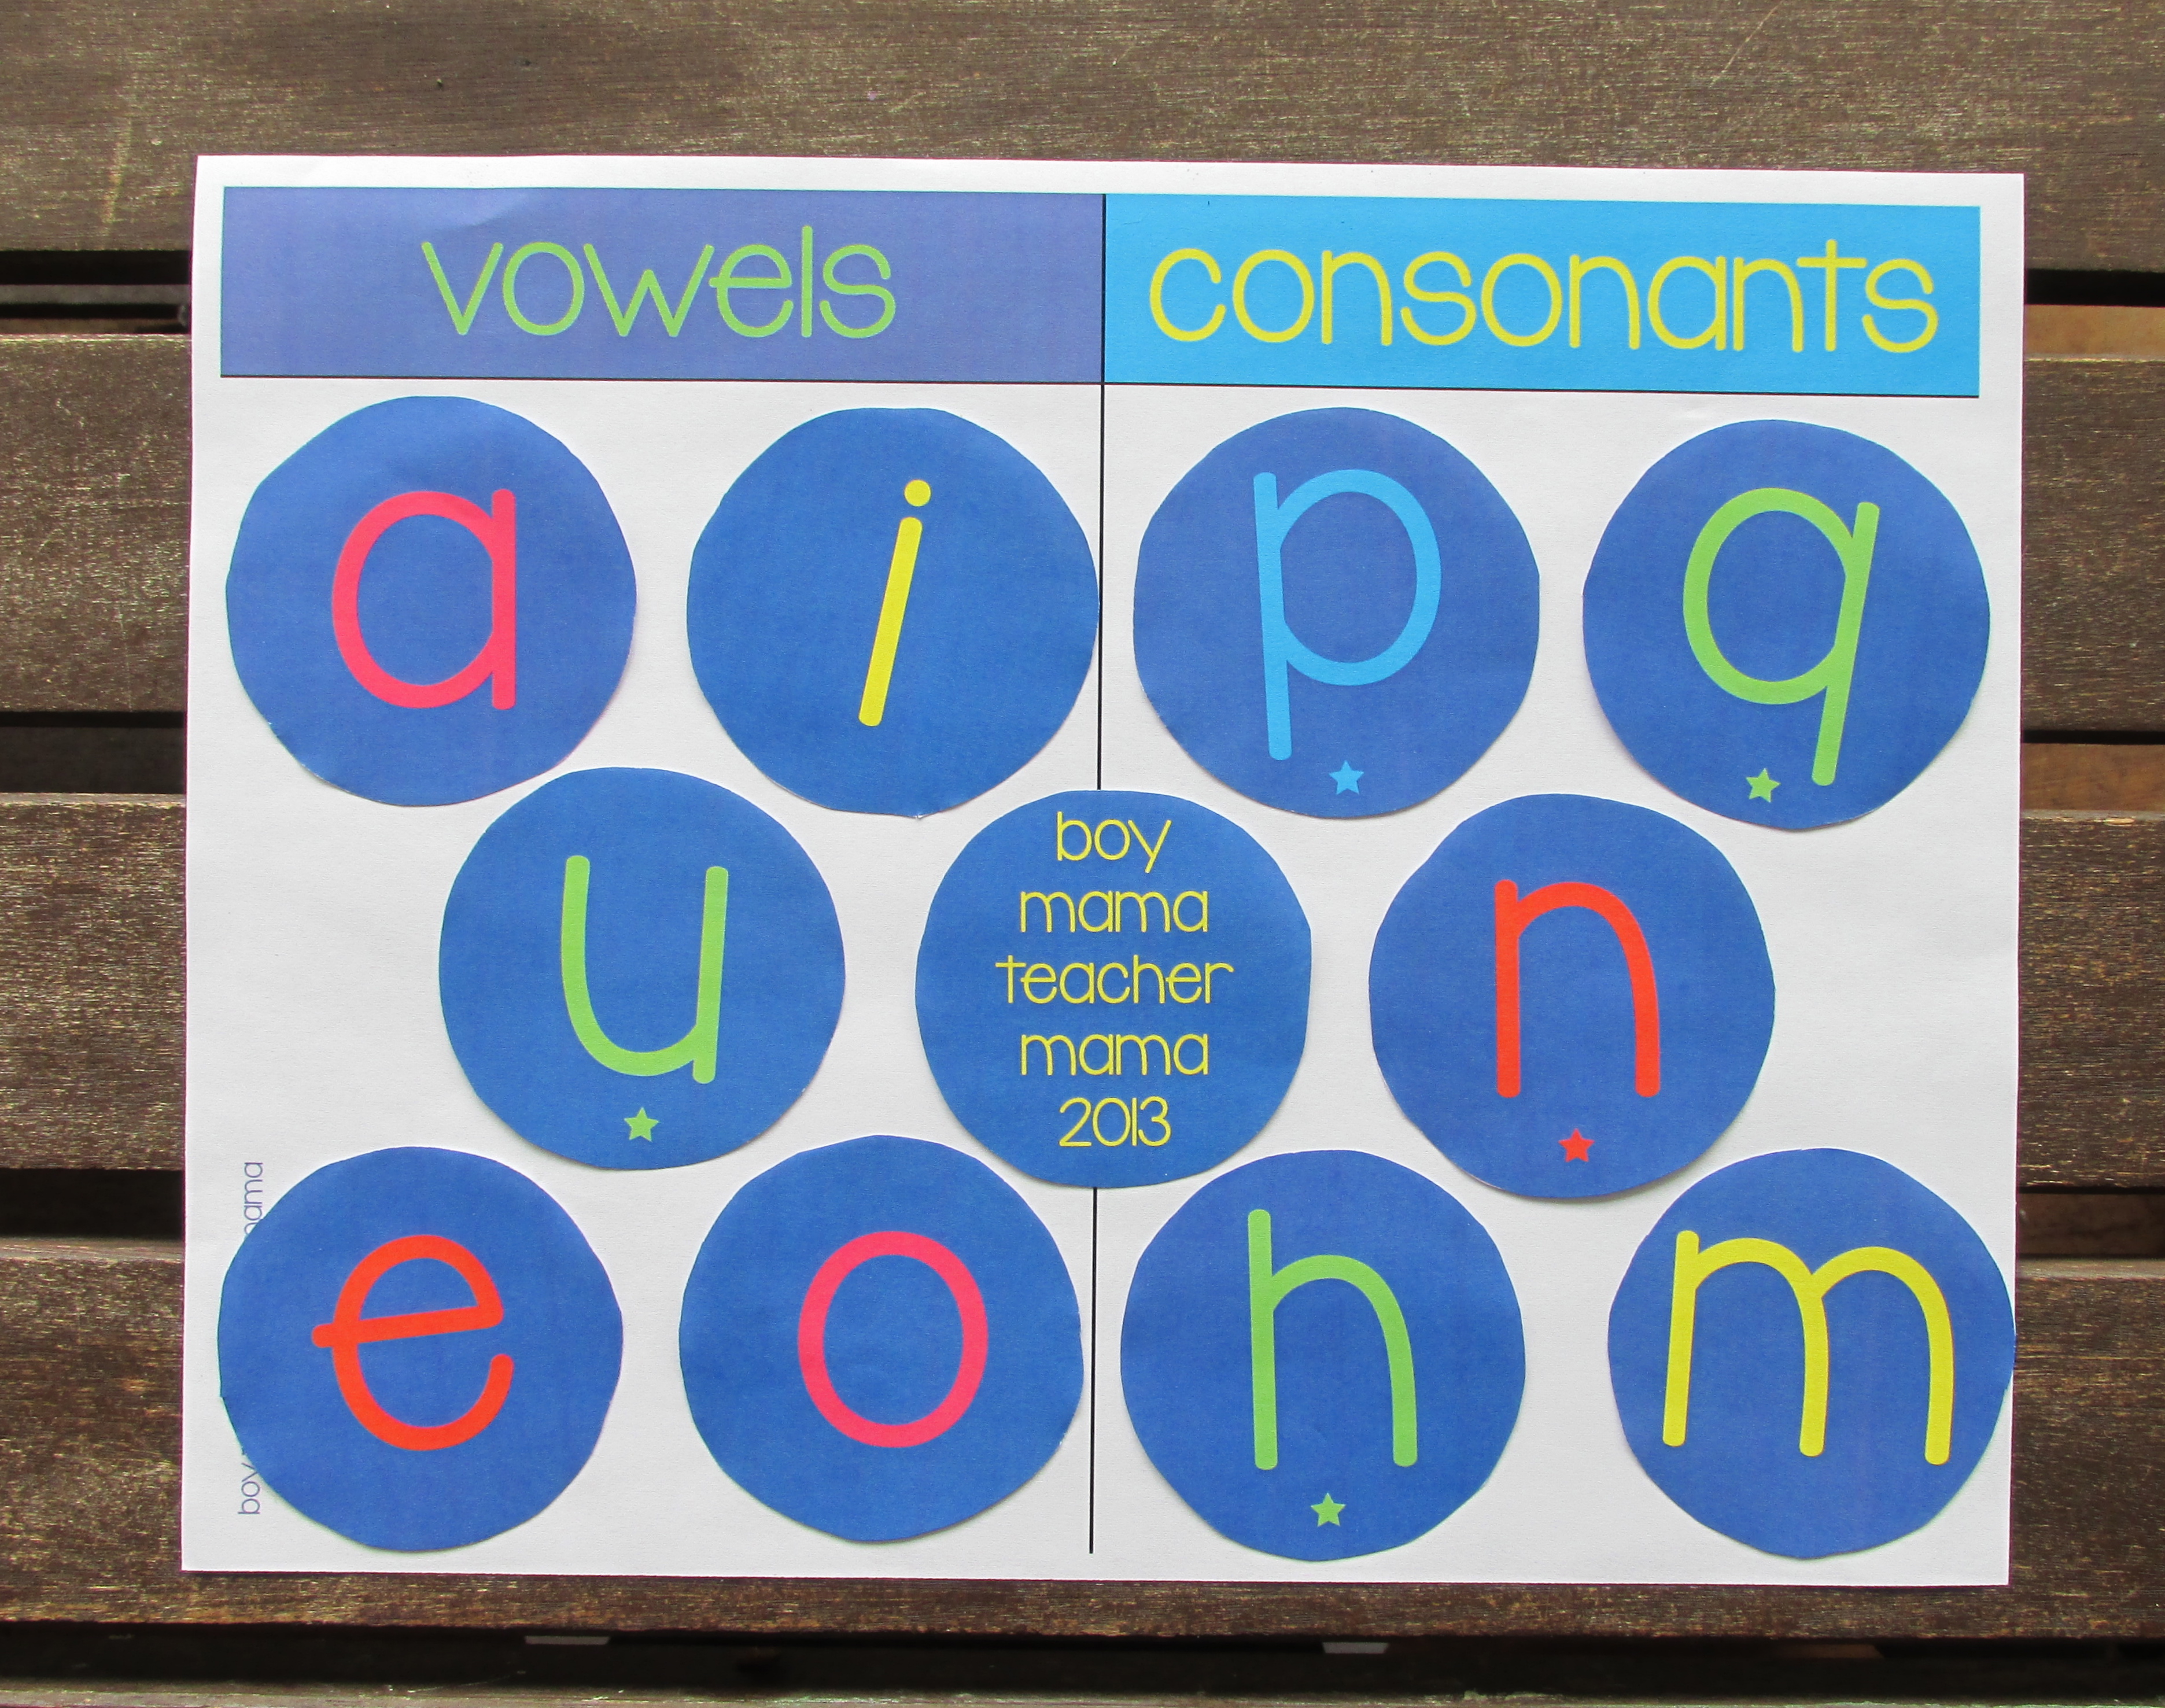 Teacher Mama Teaching Vowels and Consonants to Children Boy Mama